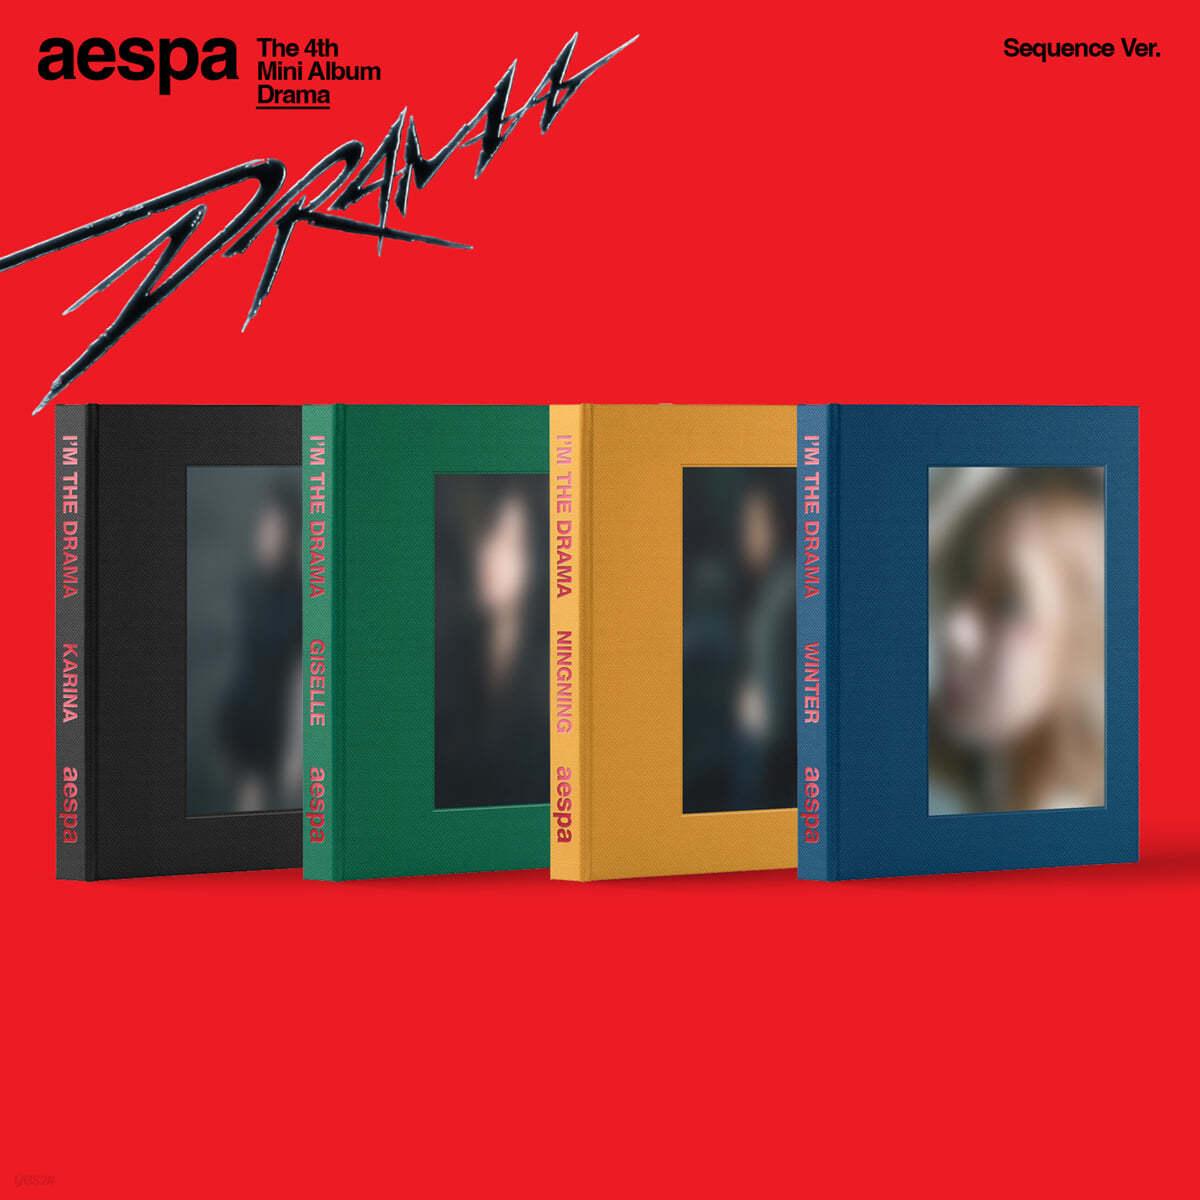 AESPA 4th Mini Album 'Drama' (Sequence Ver.)